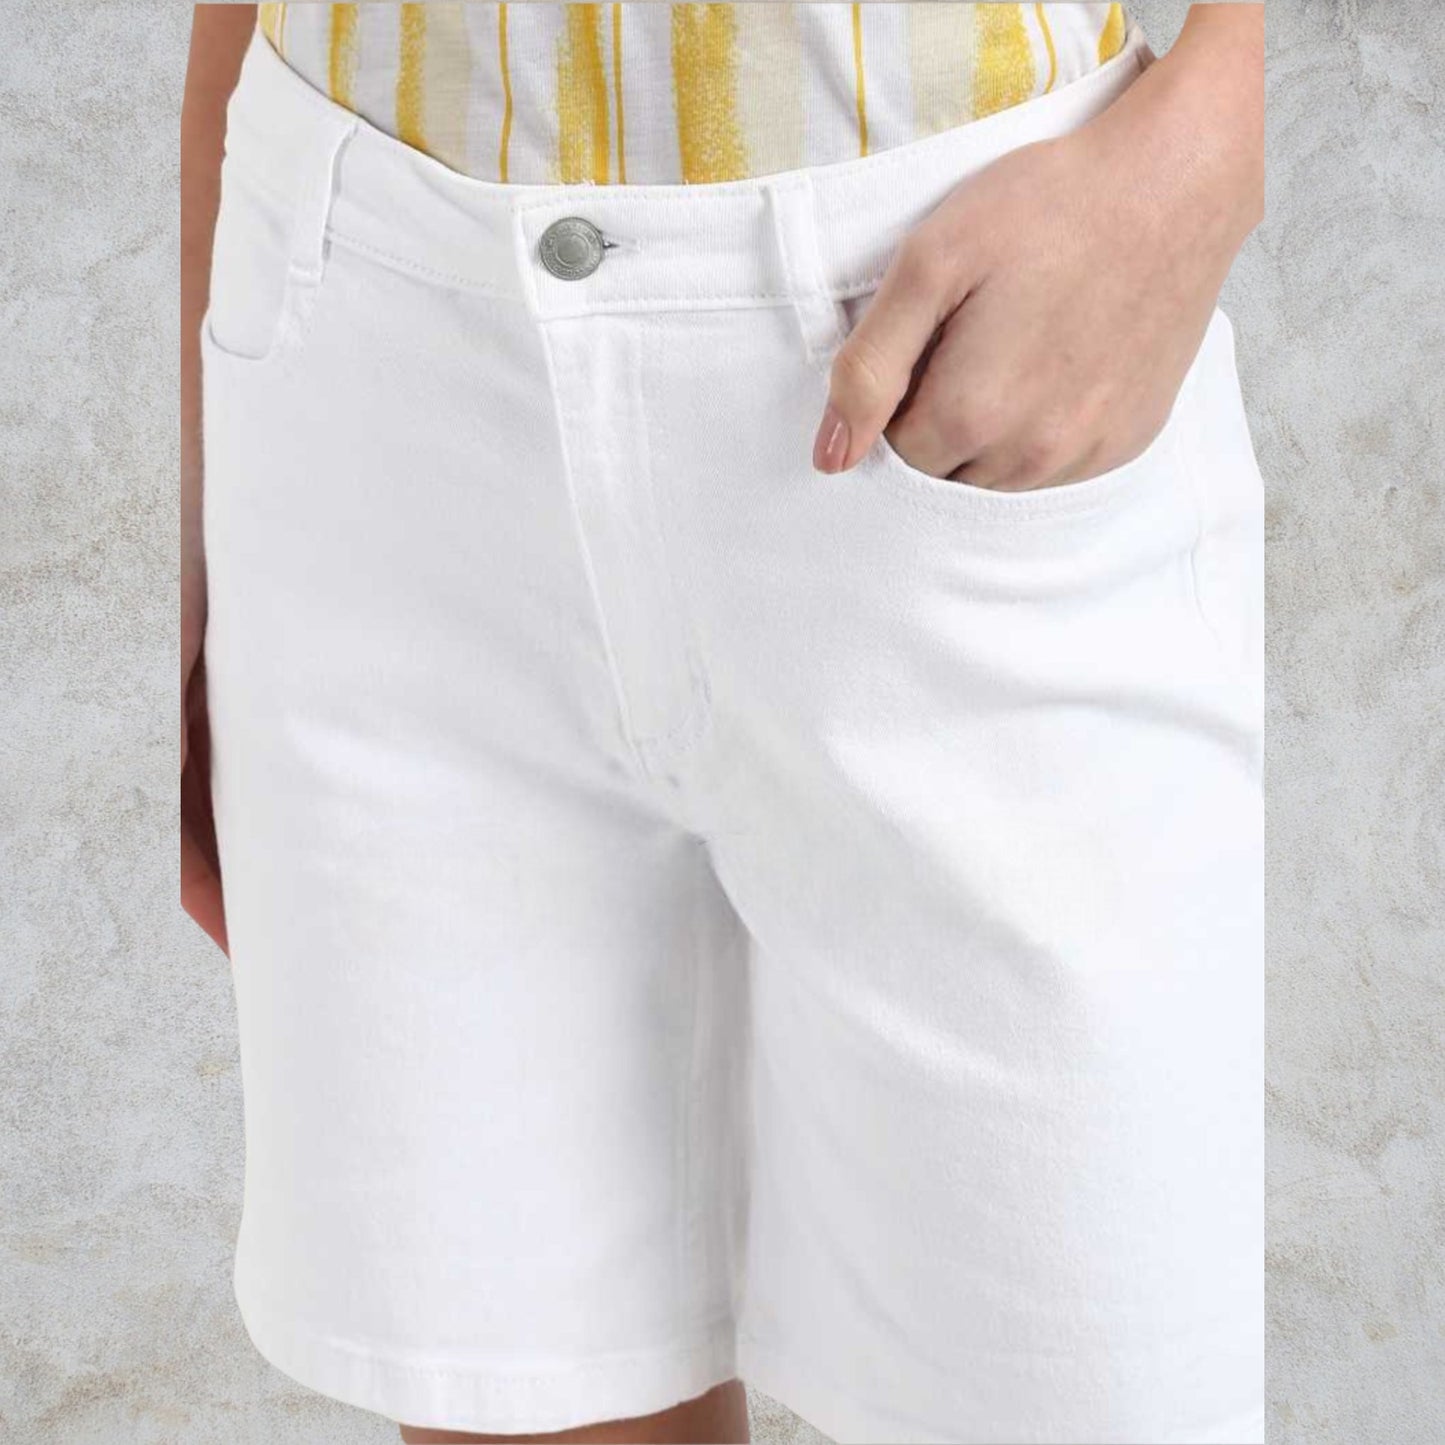 Pomodoro White Stretch Cotton Shorts UK 16 US 12 EU 44 BNWT RRP £59.95 Timeless Fashions